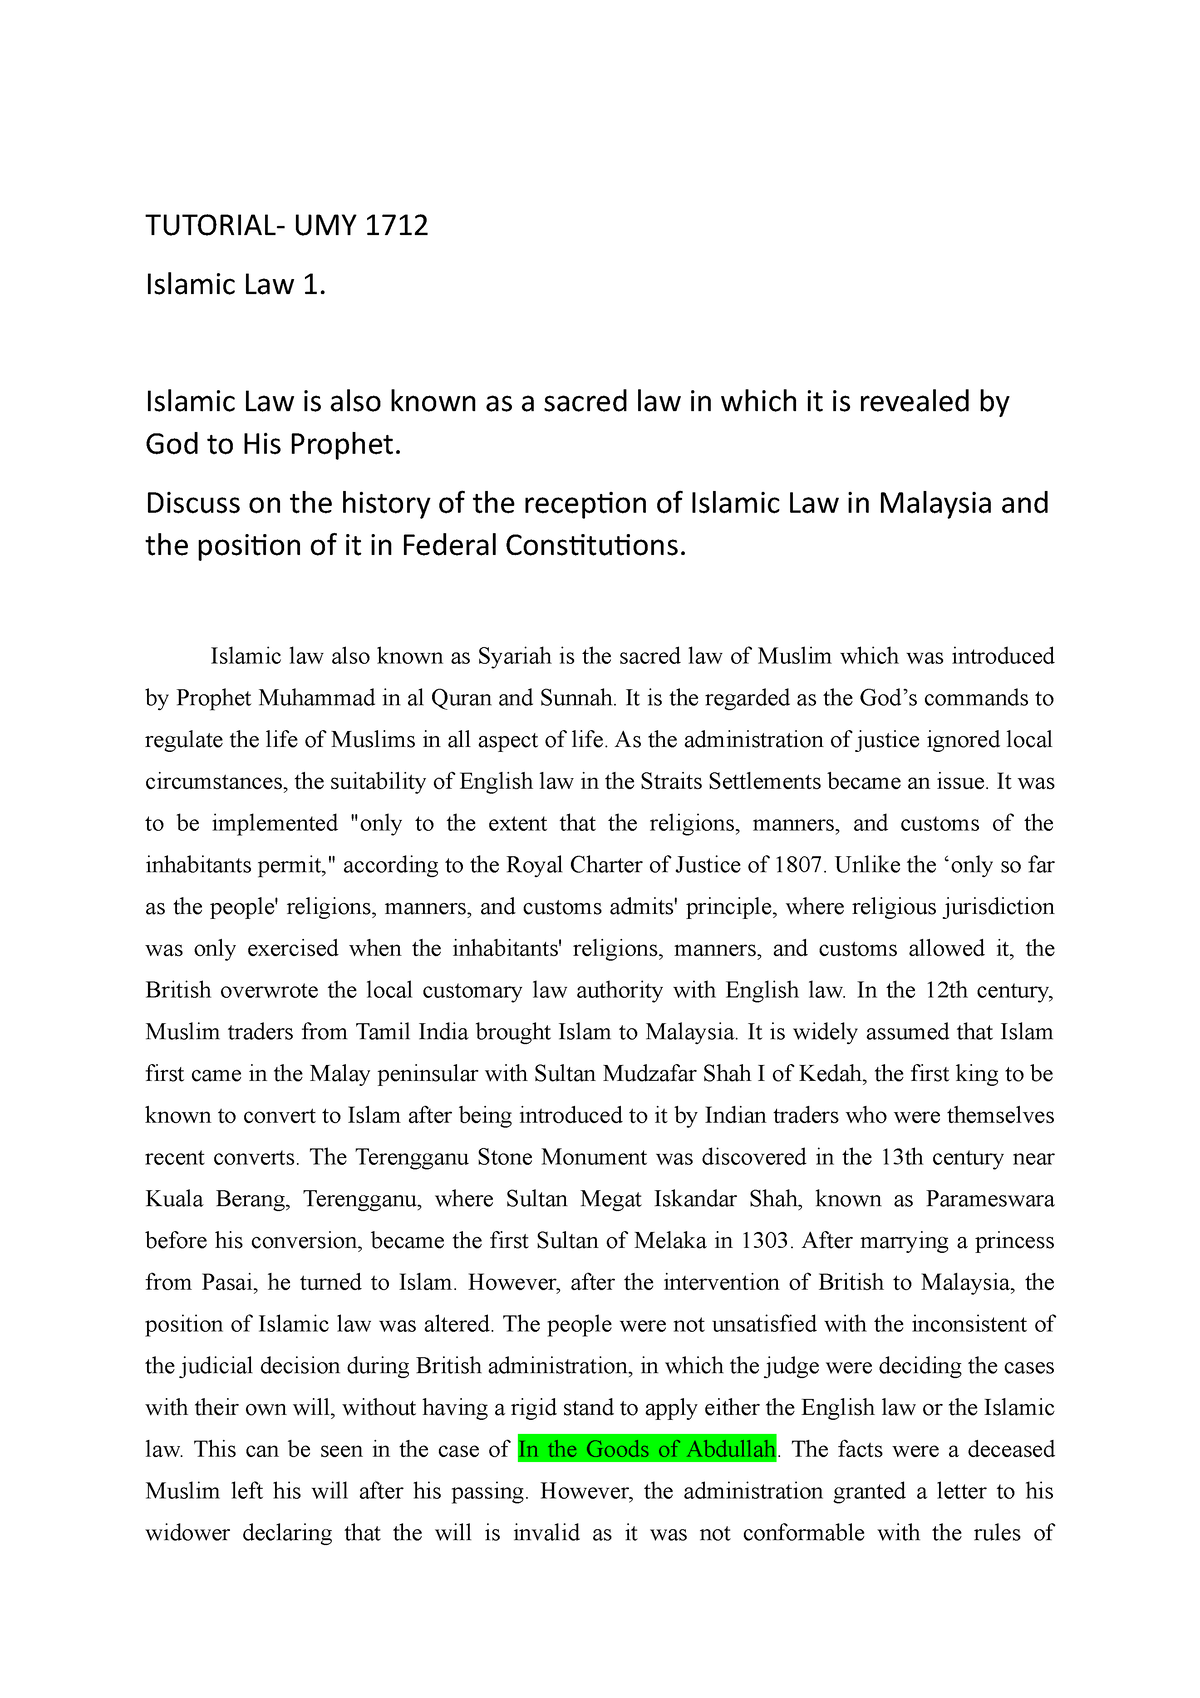 MLS tutorial 2 - lesko - TUTORIAL- UMY 1712 Islamic Law 1. Islamic Law ...